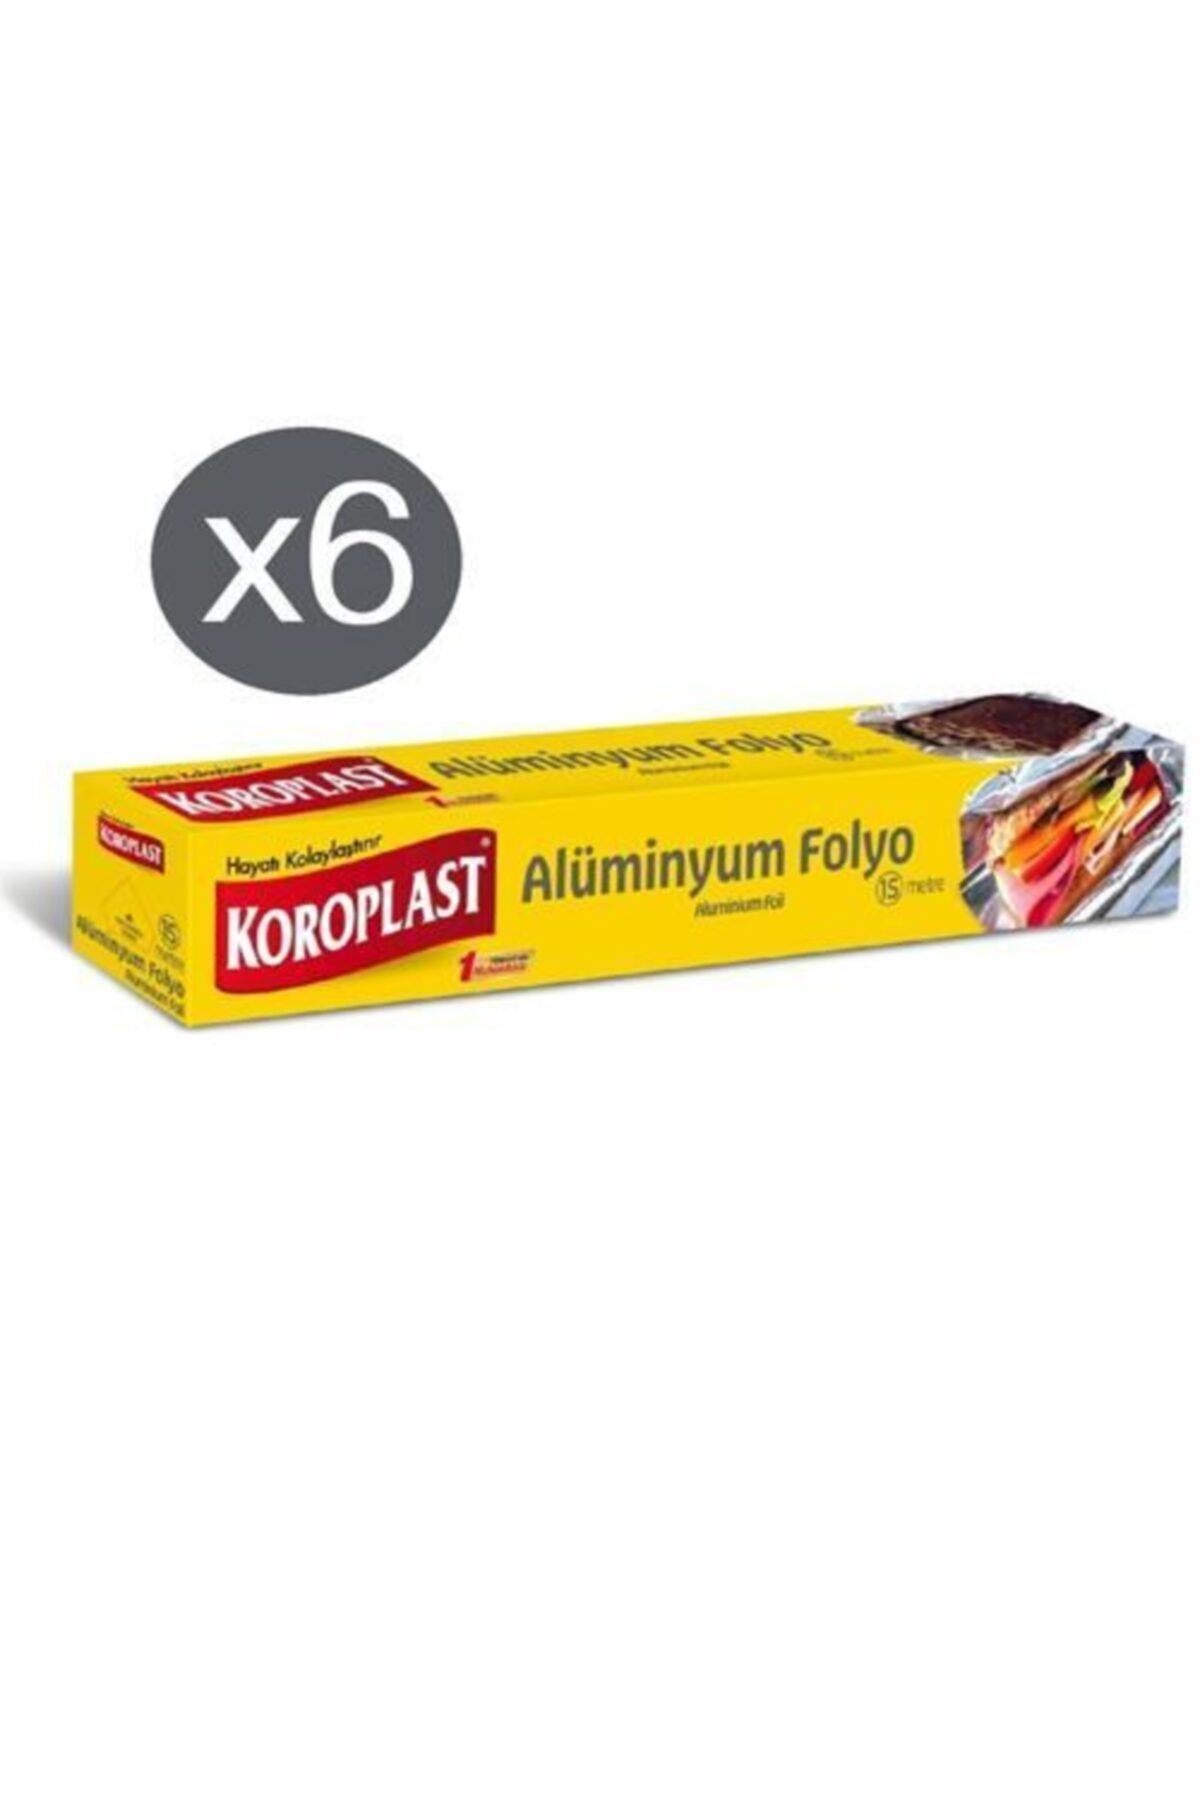 Koroplast Alüminyum Folyo 15 Metre X 6 Paket (30cm*15m)